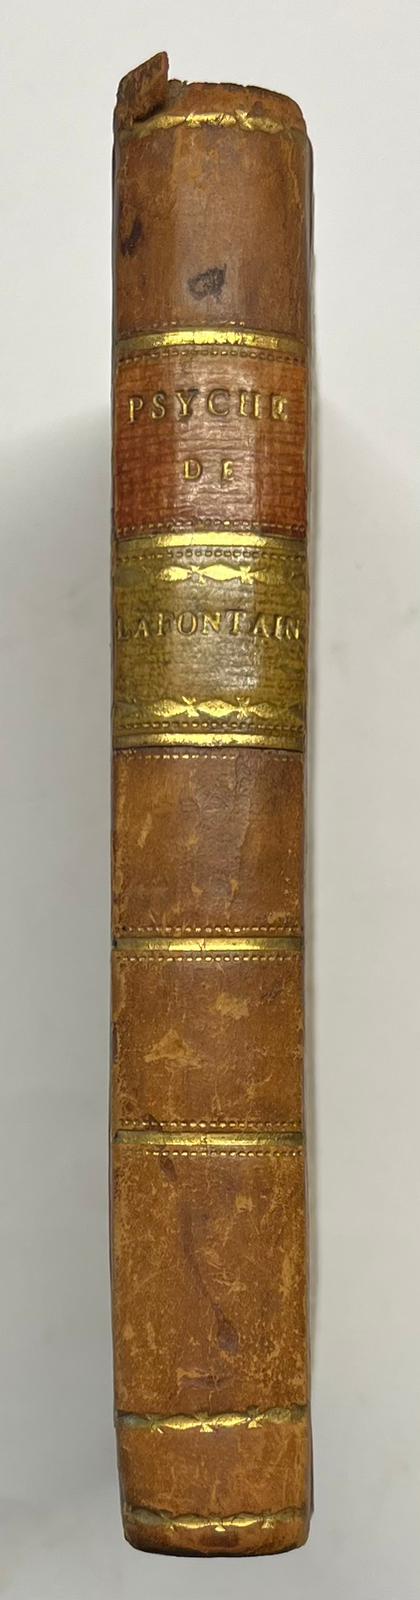 La Fontaine, 1809, French | Oeuvres de La Fontaine, Oeuvres Diverse de la Fontaine, Paris, Imprimerie de Mame, Frères, 1809, 412 pp. Three volumes, fine set.